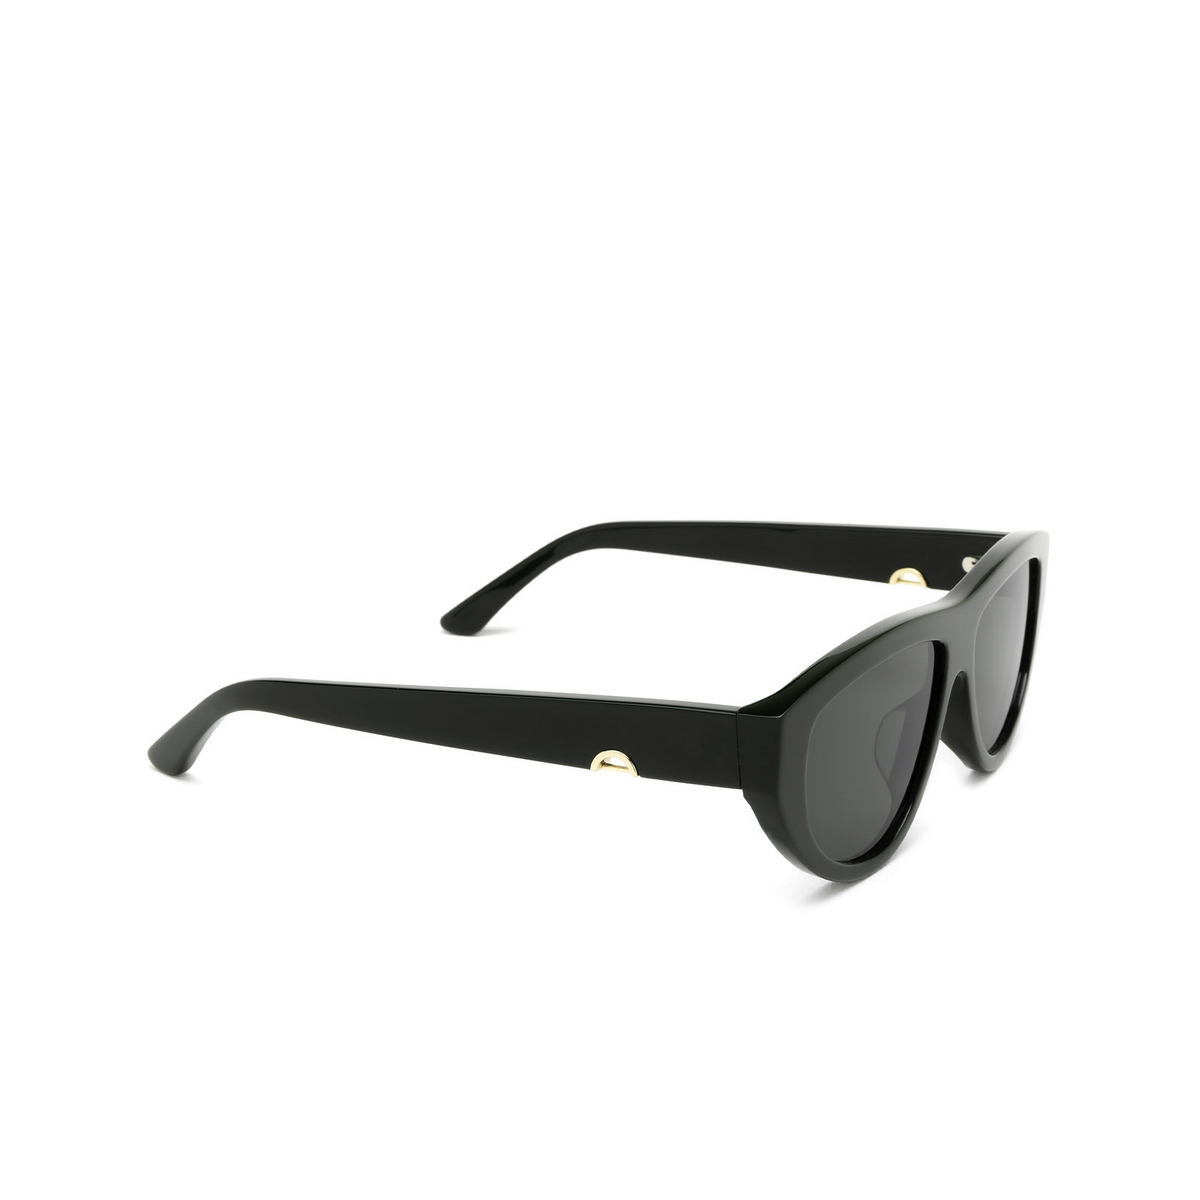 Huma® Oval Sunglasses: Viko color Green 13 - three-quarters view.